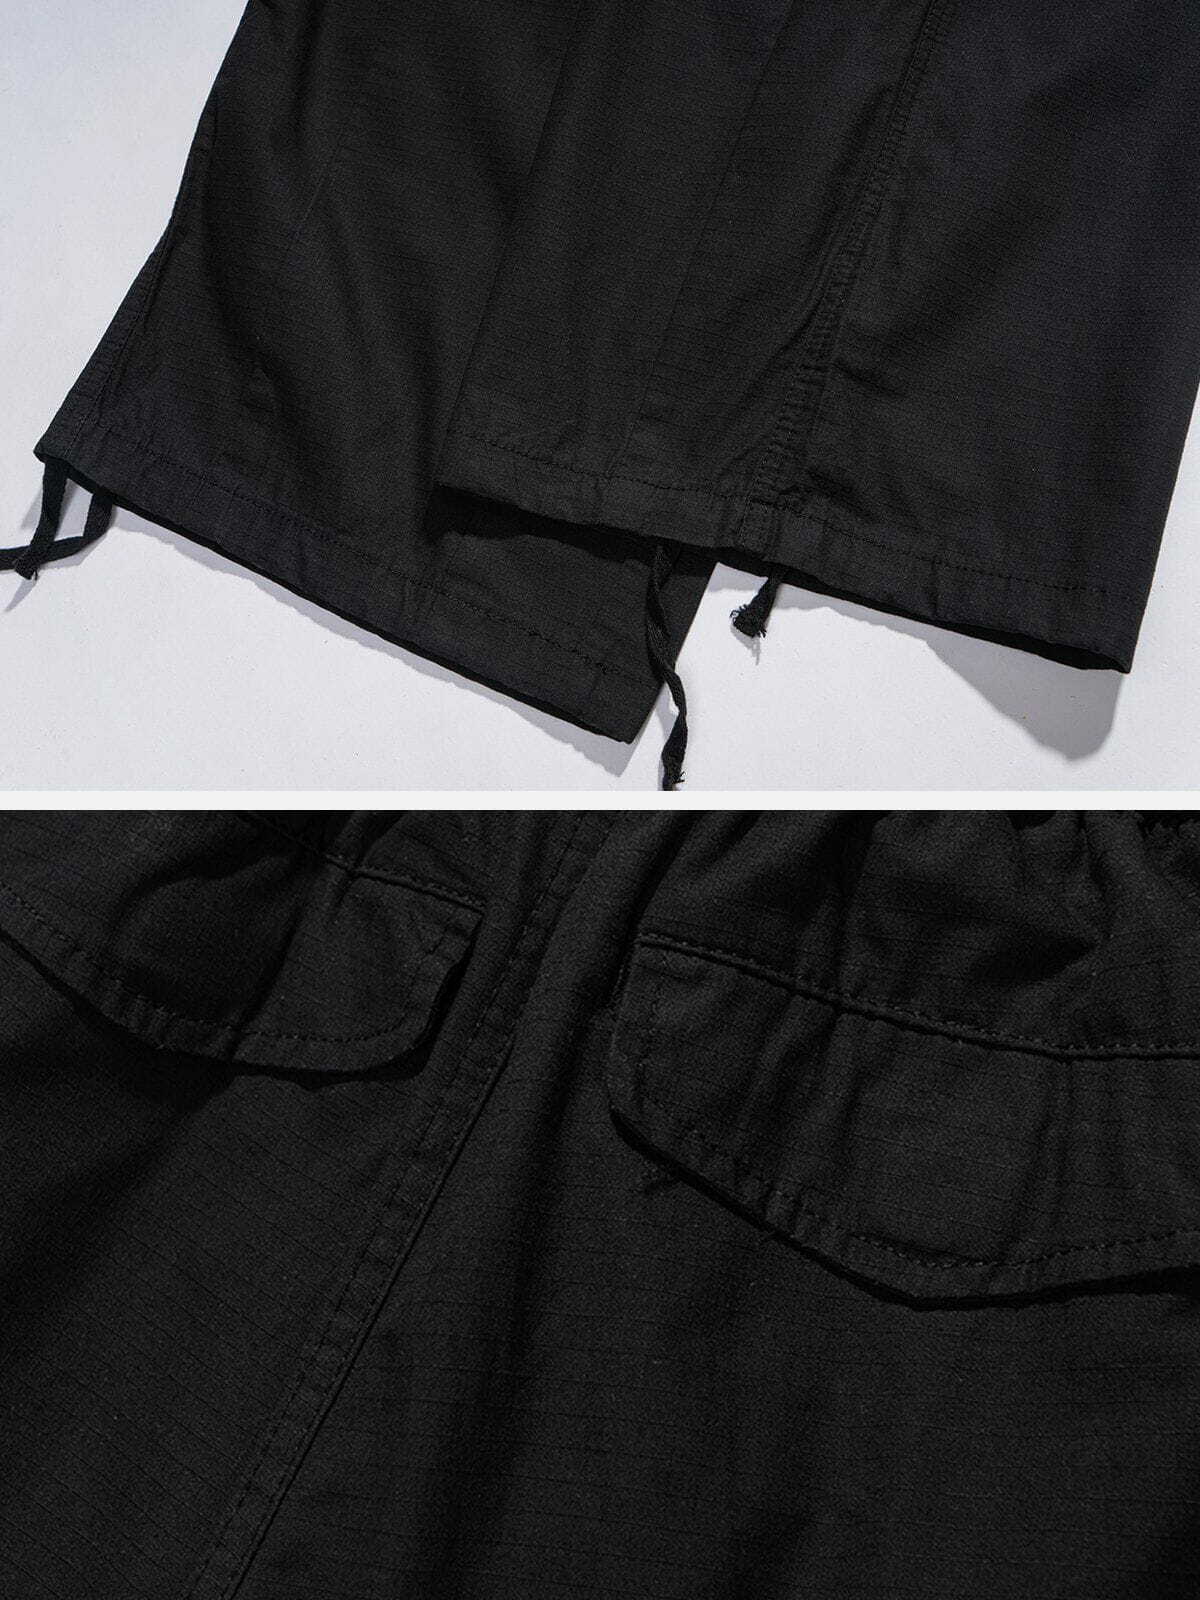 loose pocket pants effortlessly chic & functional 2546